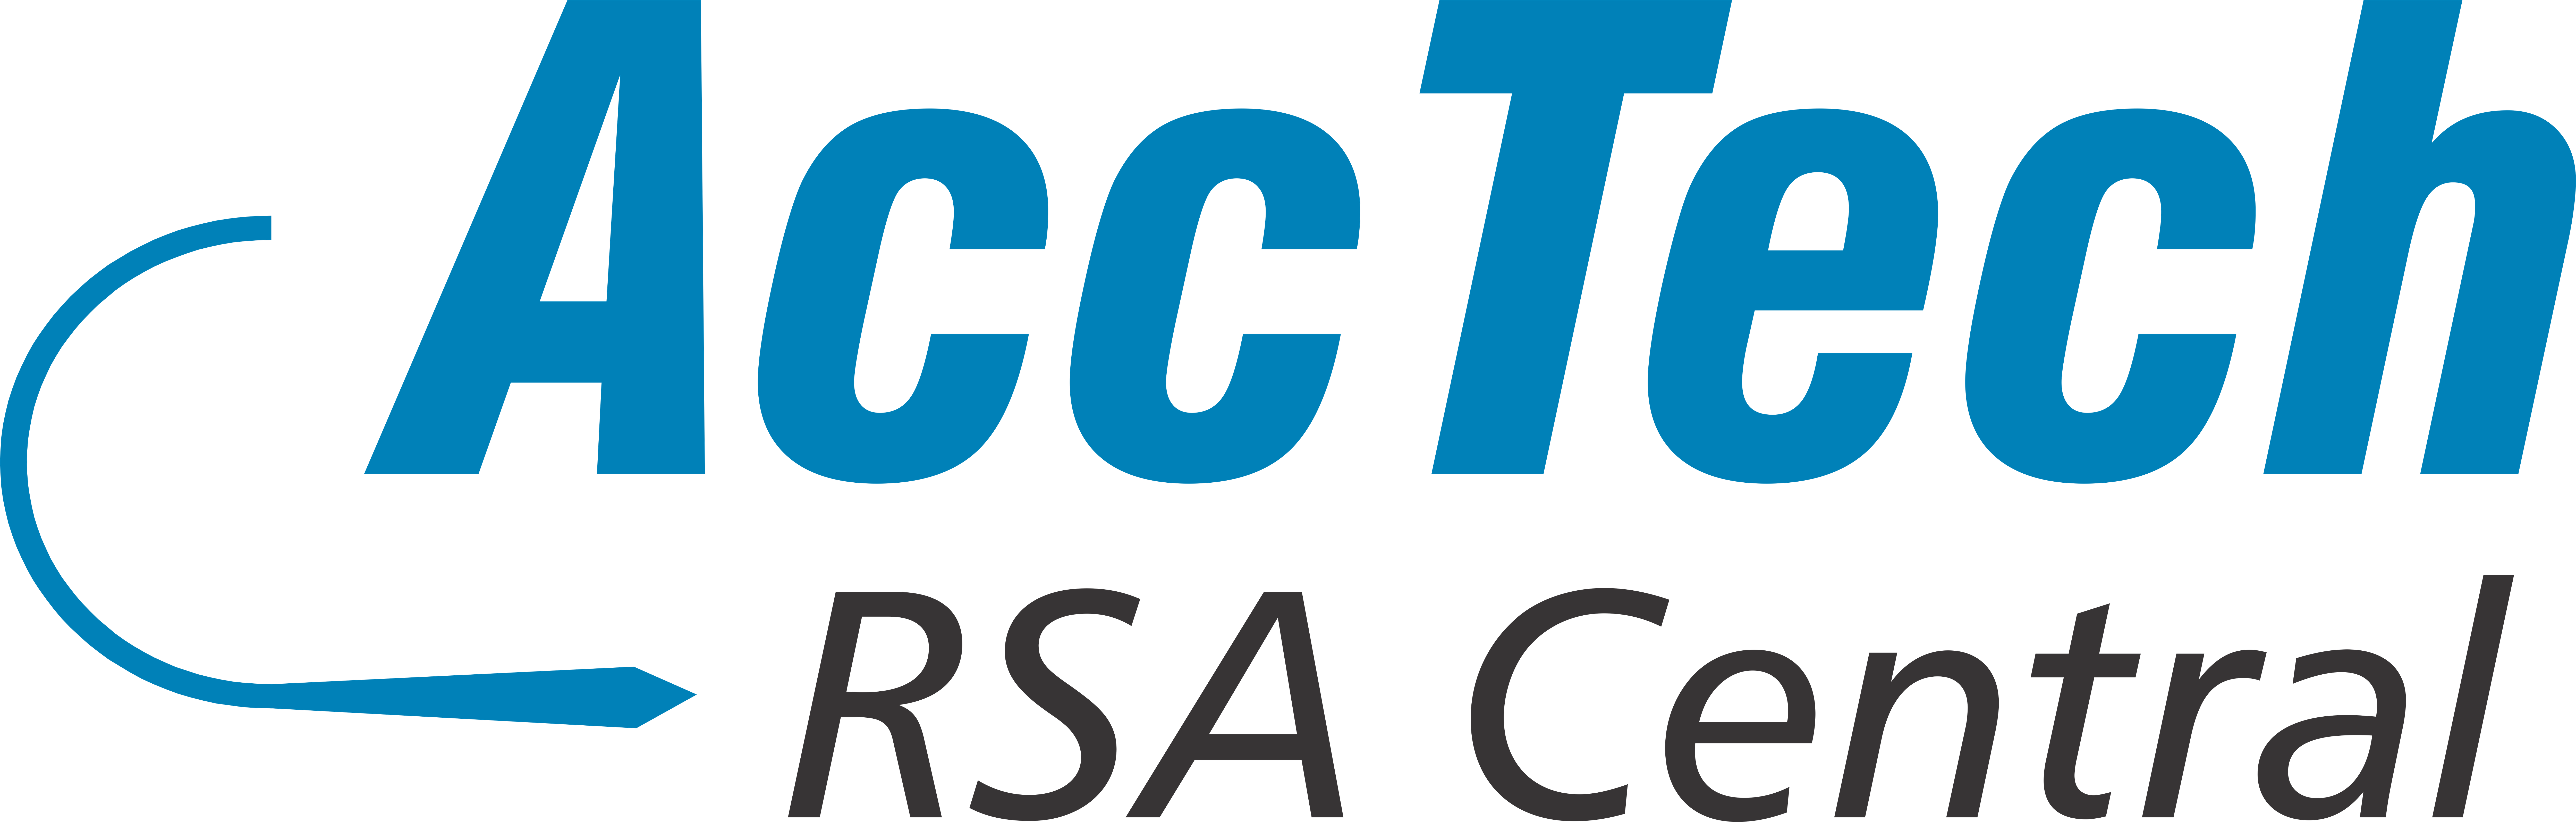 AccTech RSA Central